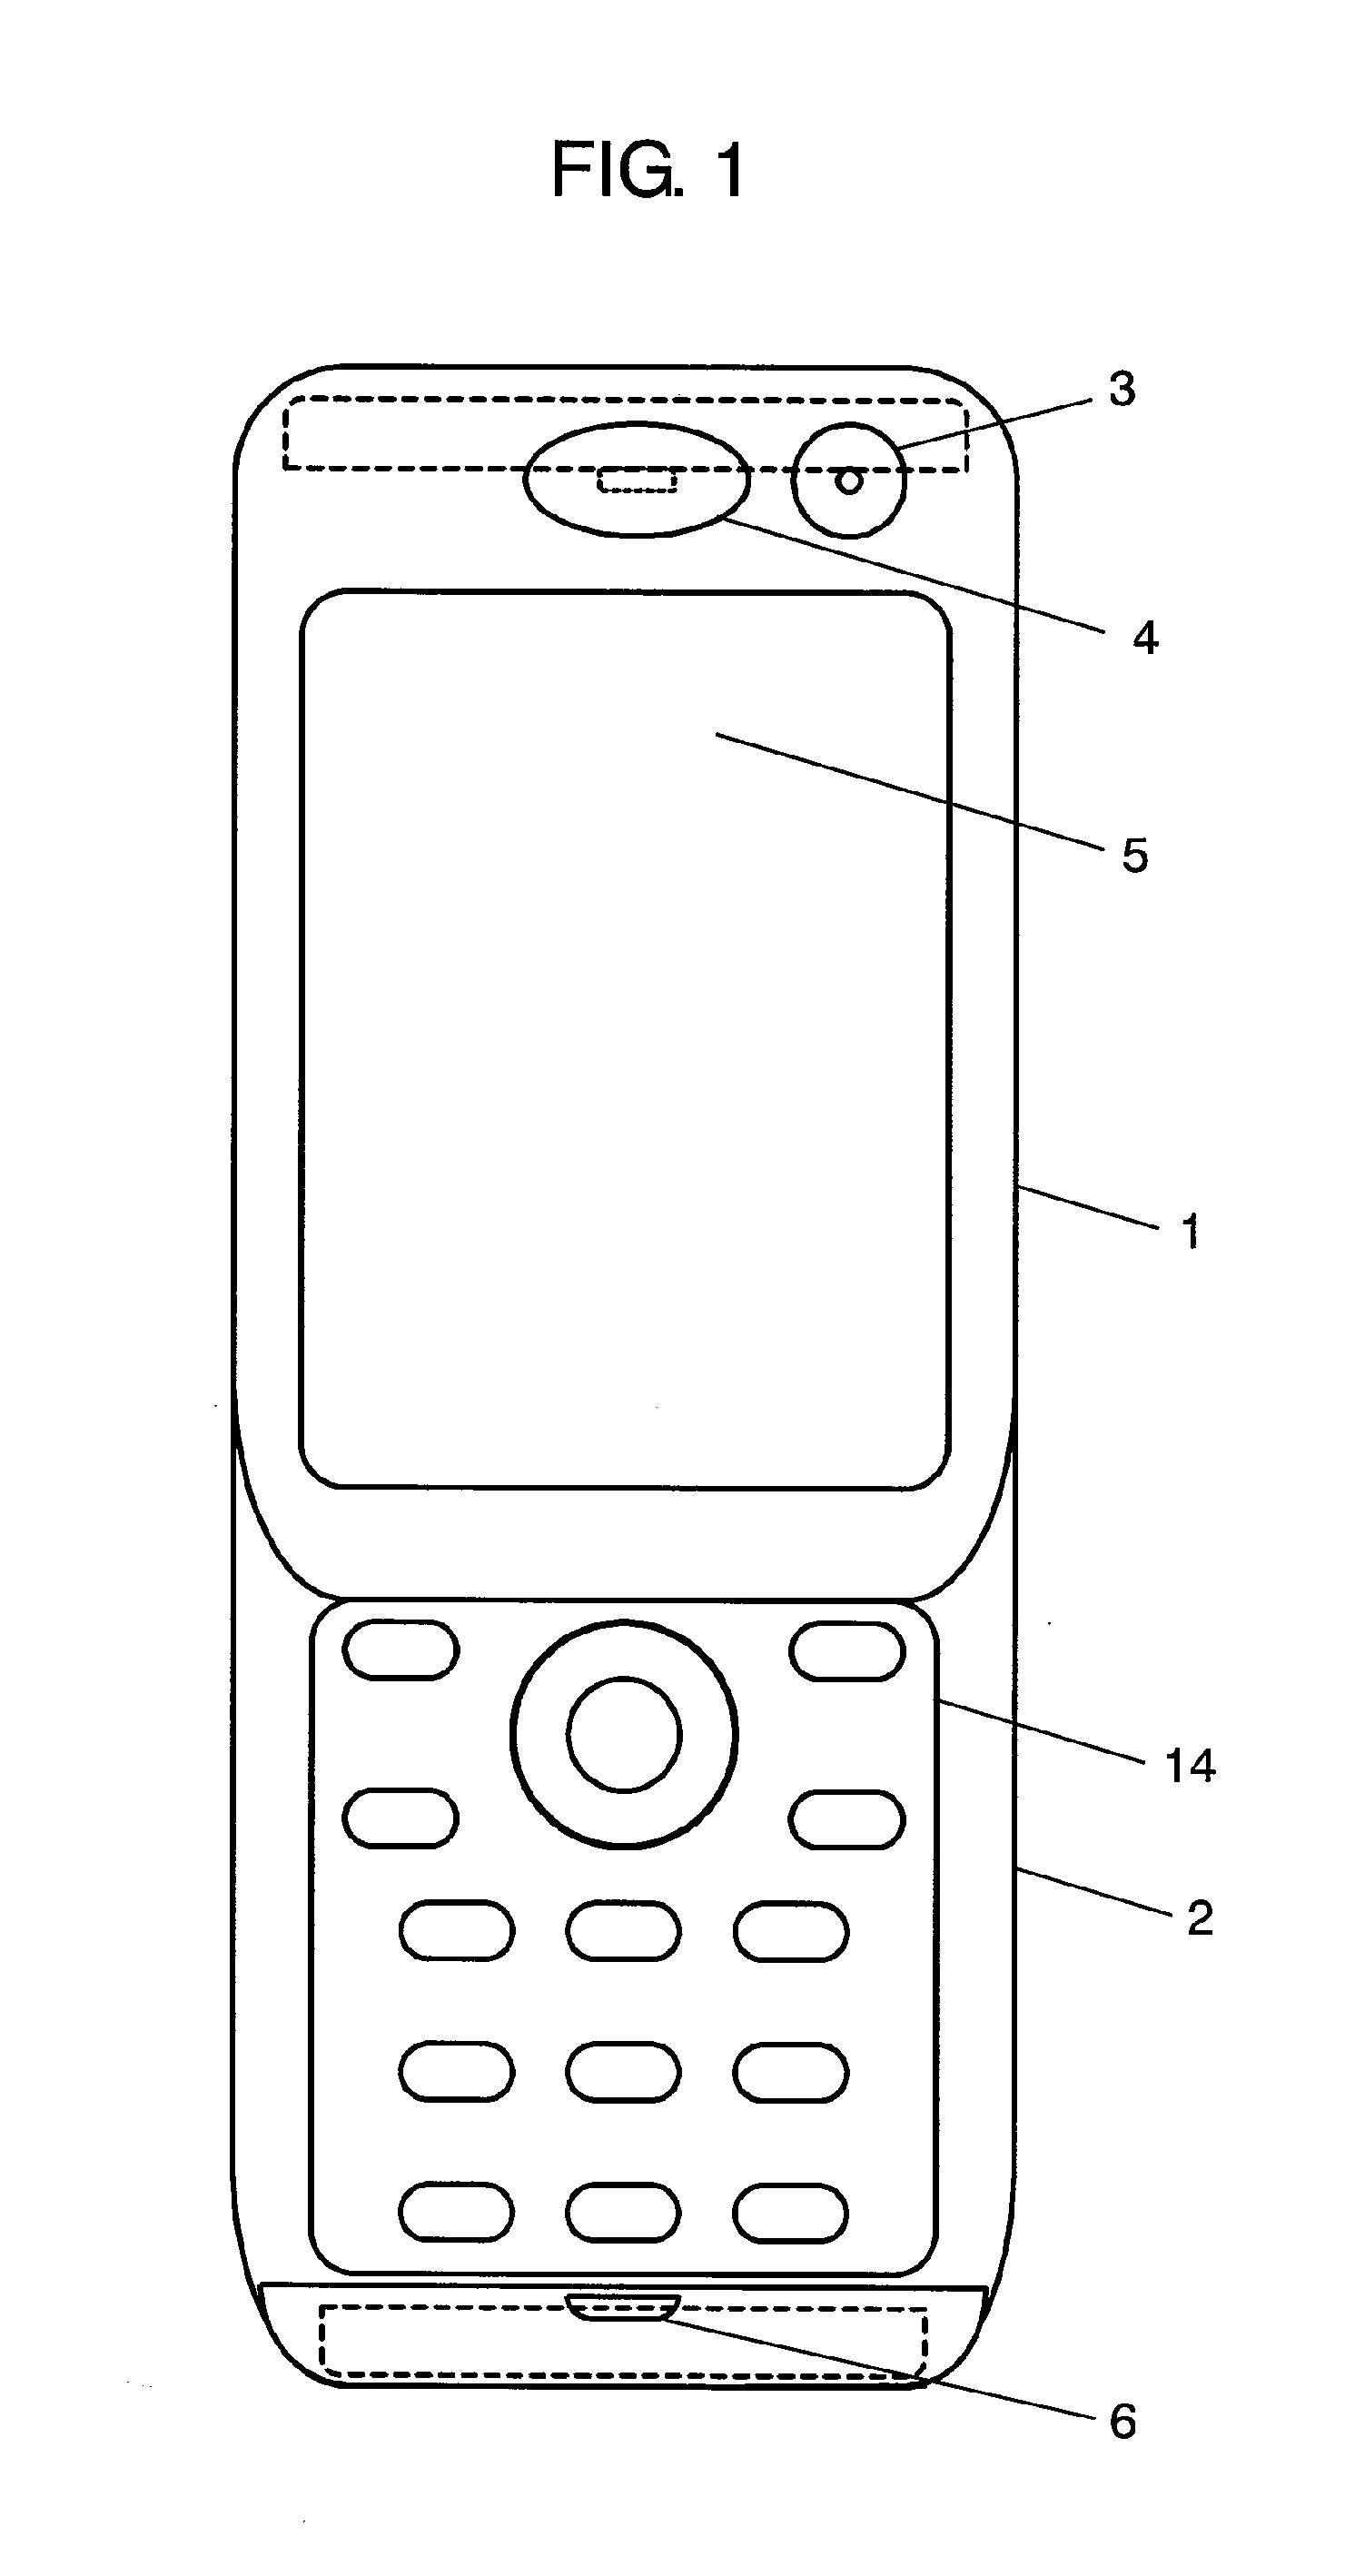 Portable wireless unit